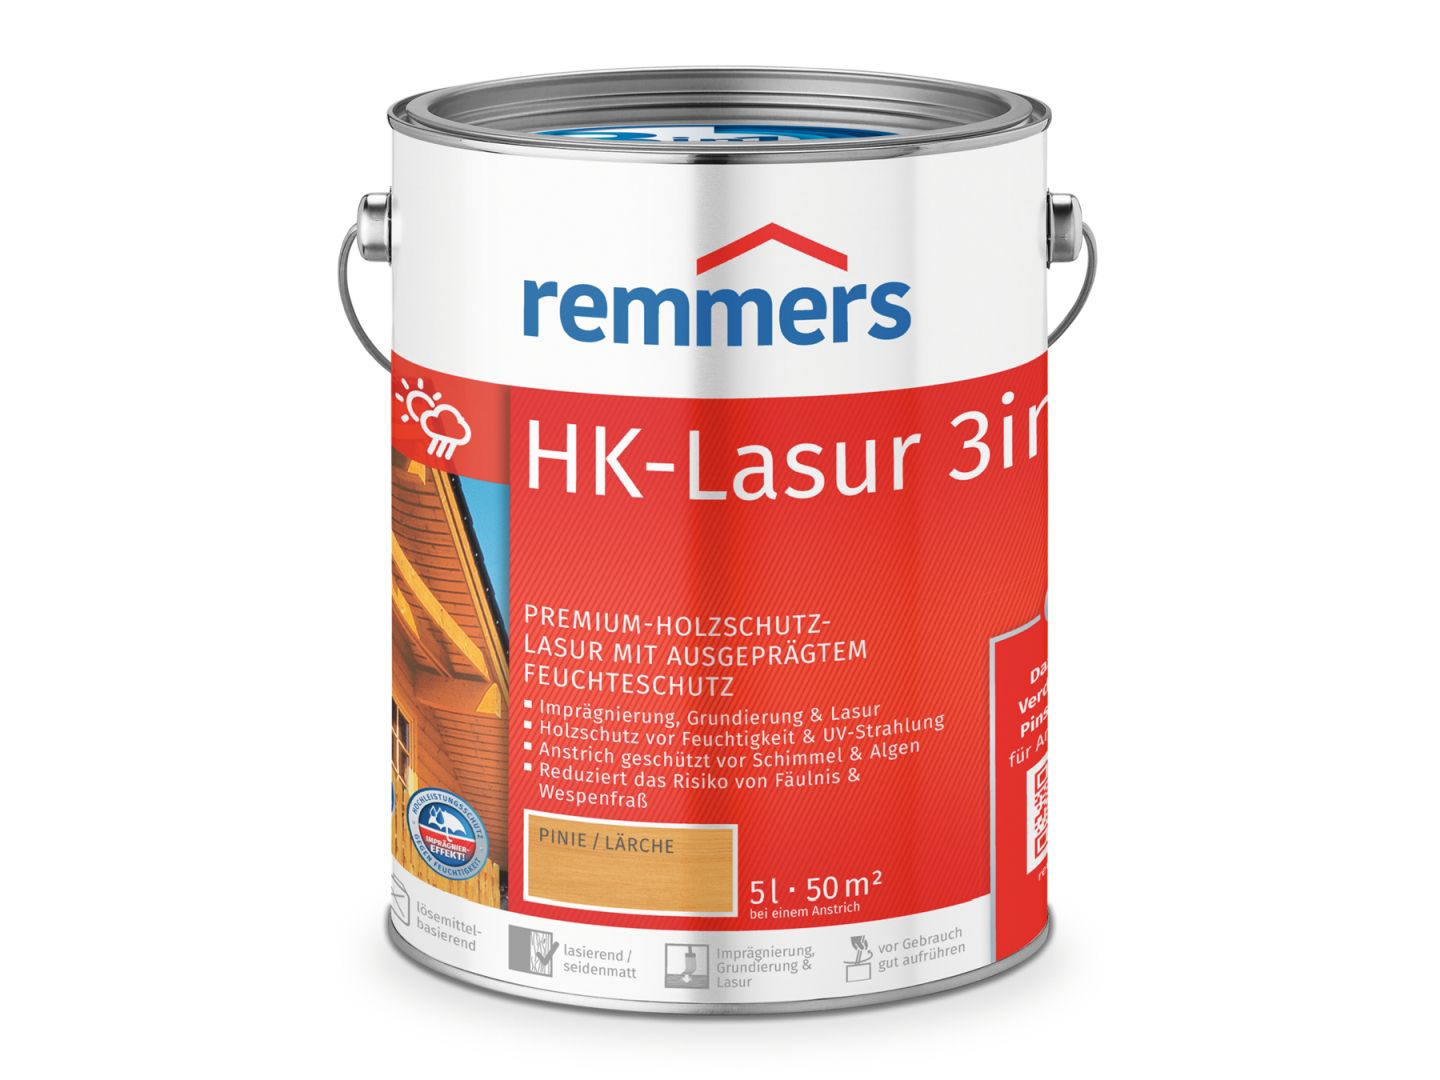 Remmers HK-Lasur 3in1, pinie/lärche (RC-260), 5 l